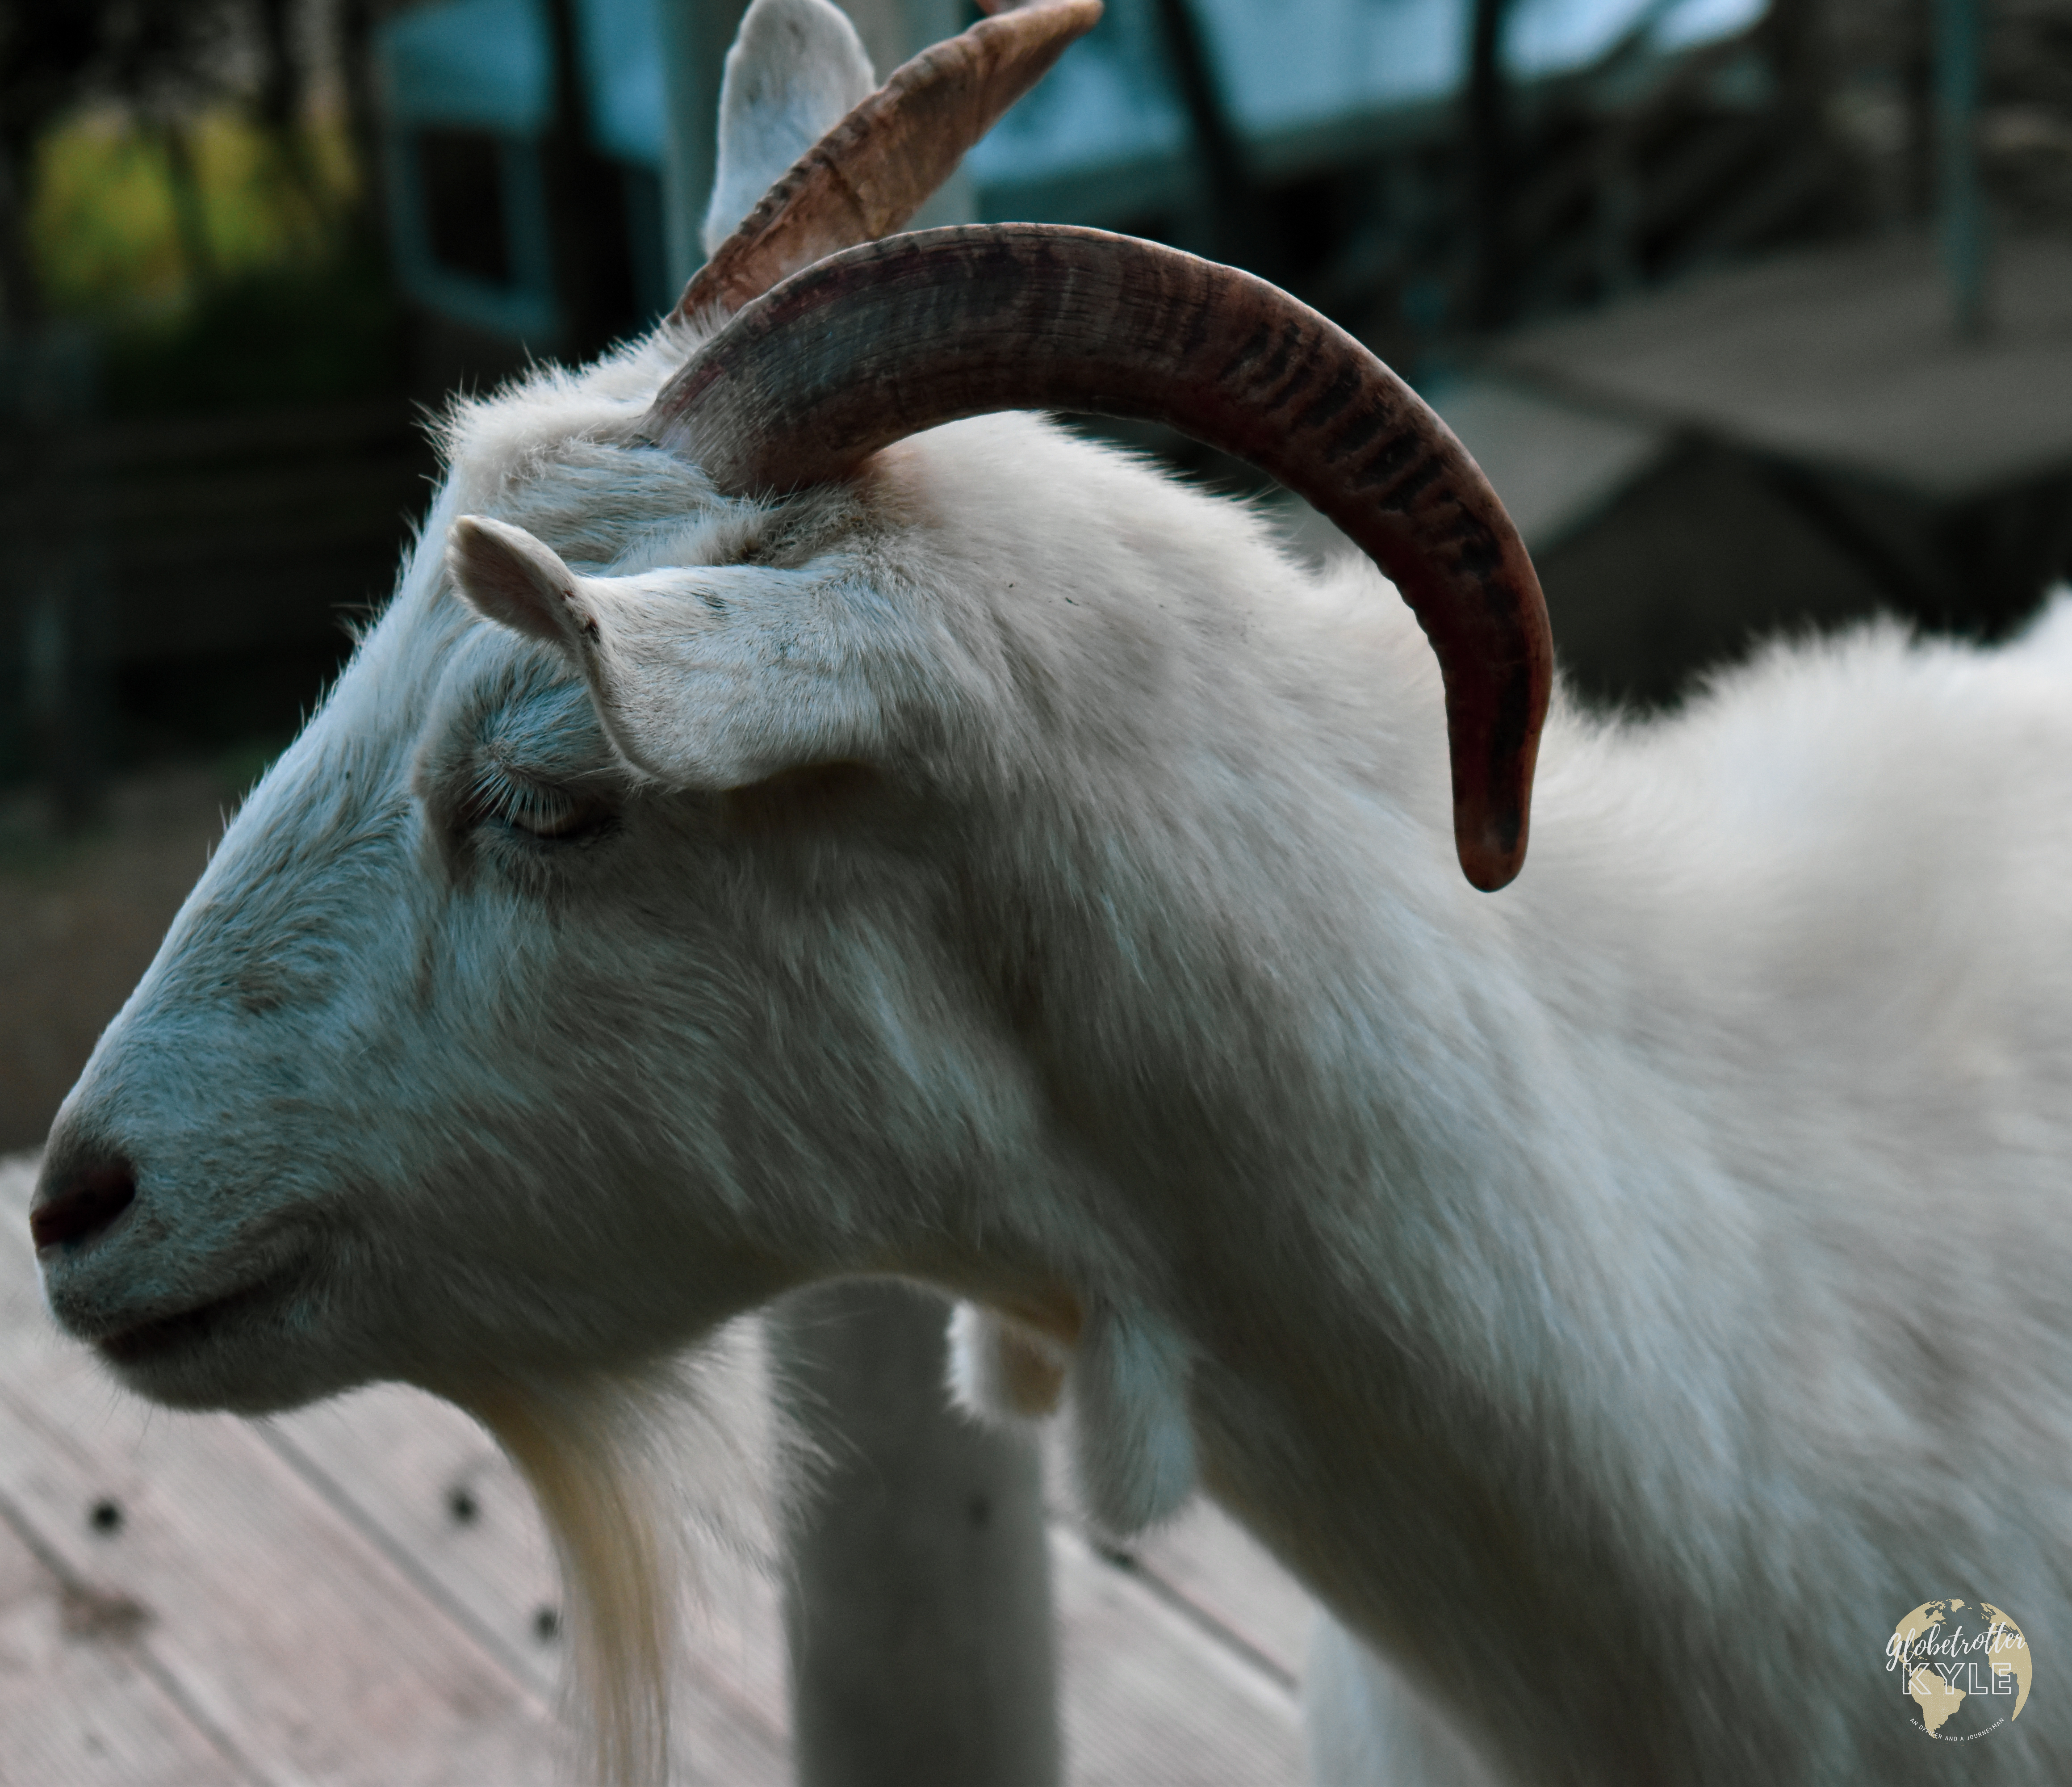 a profile image of a goat head